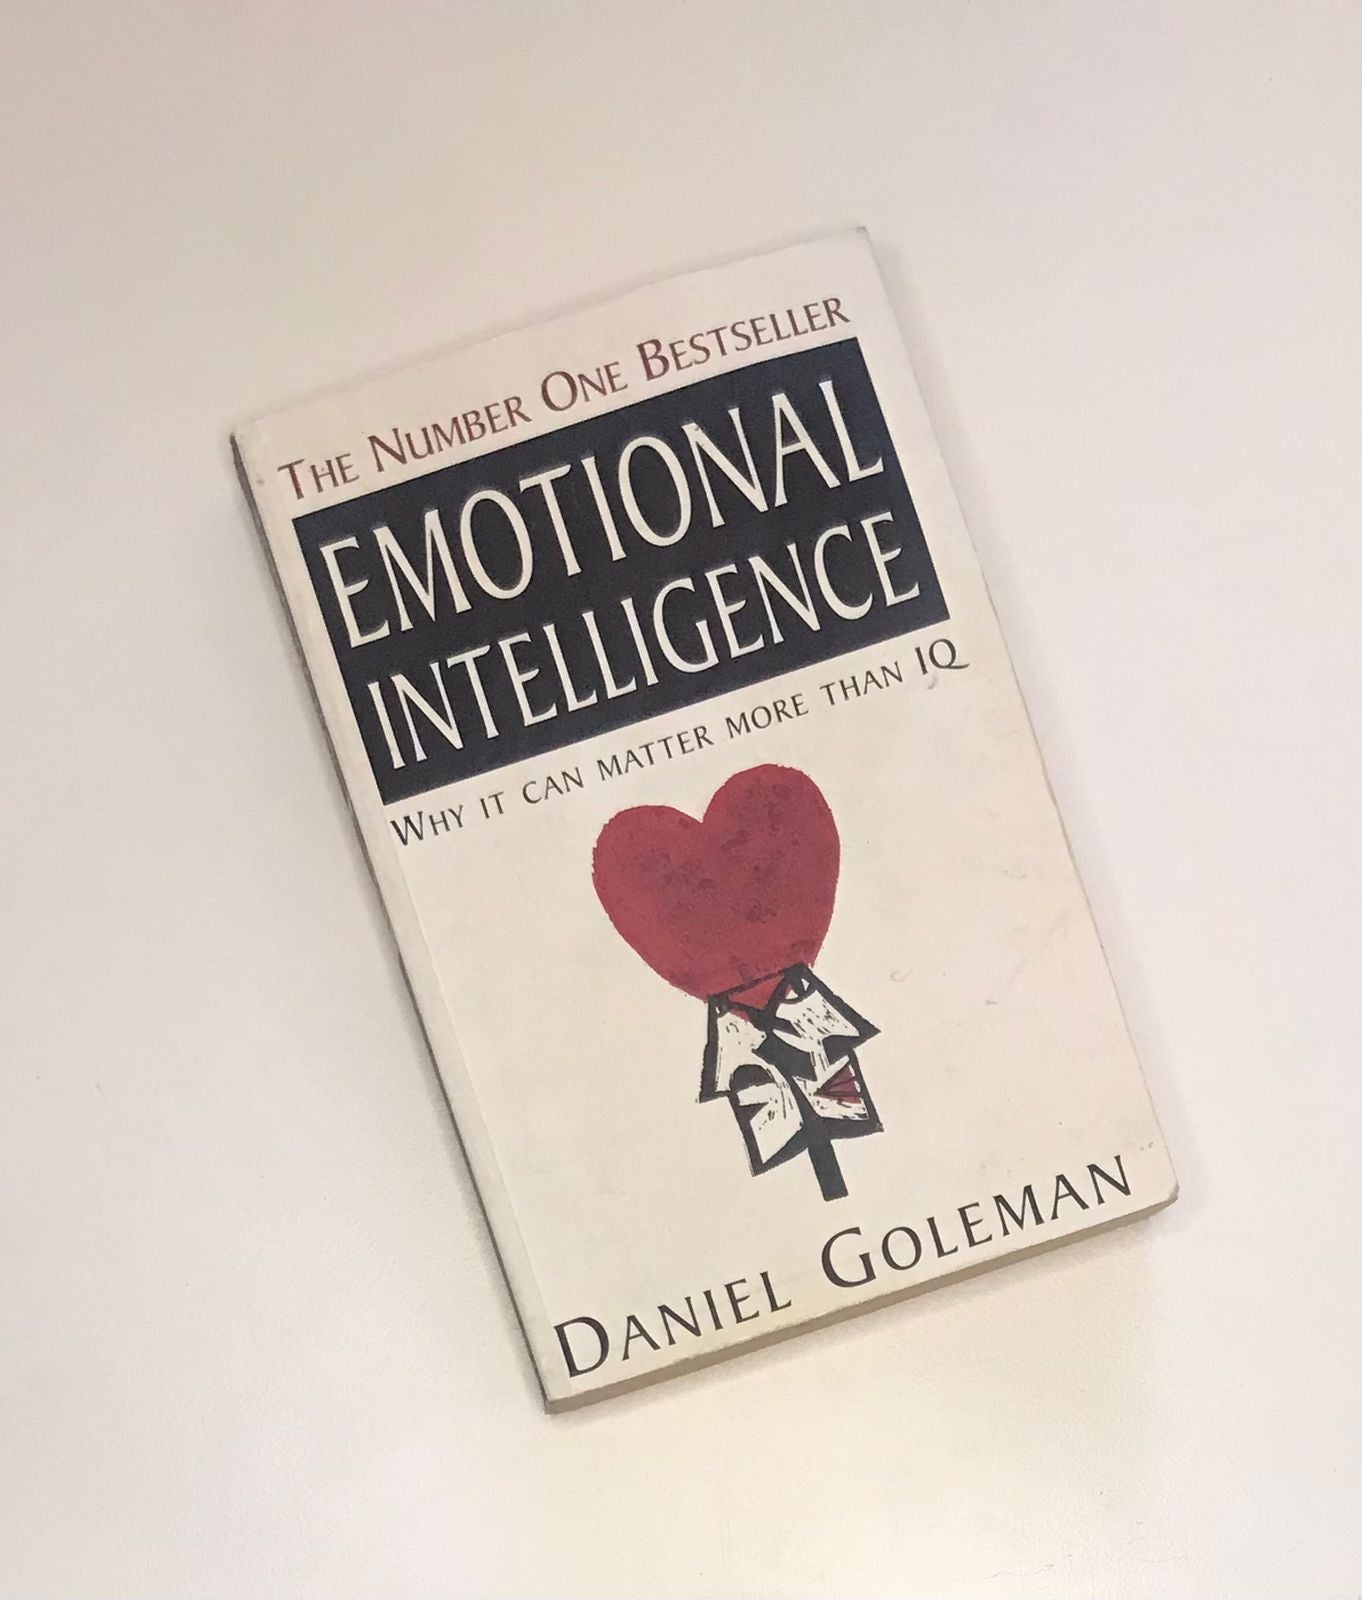 Emotional intelligence: Why it can matter more than IQ - Daniel Goleman